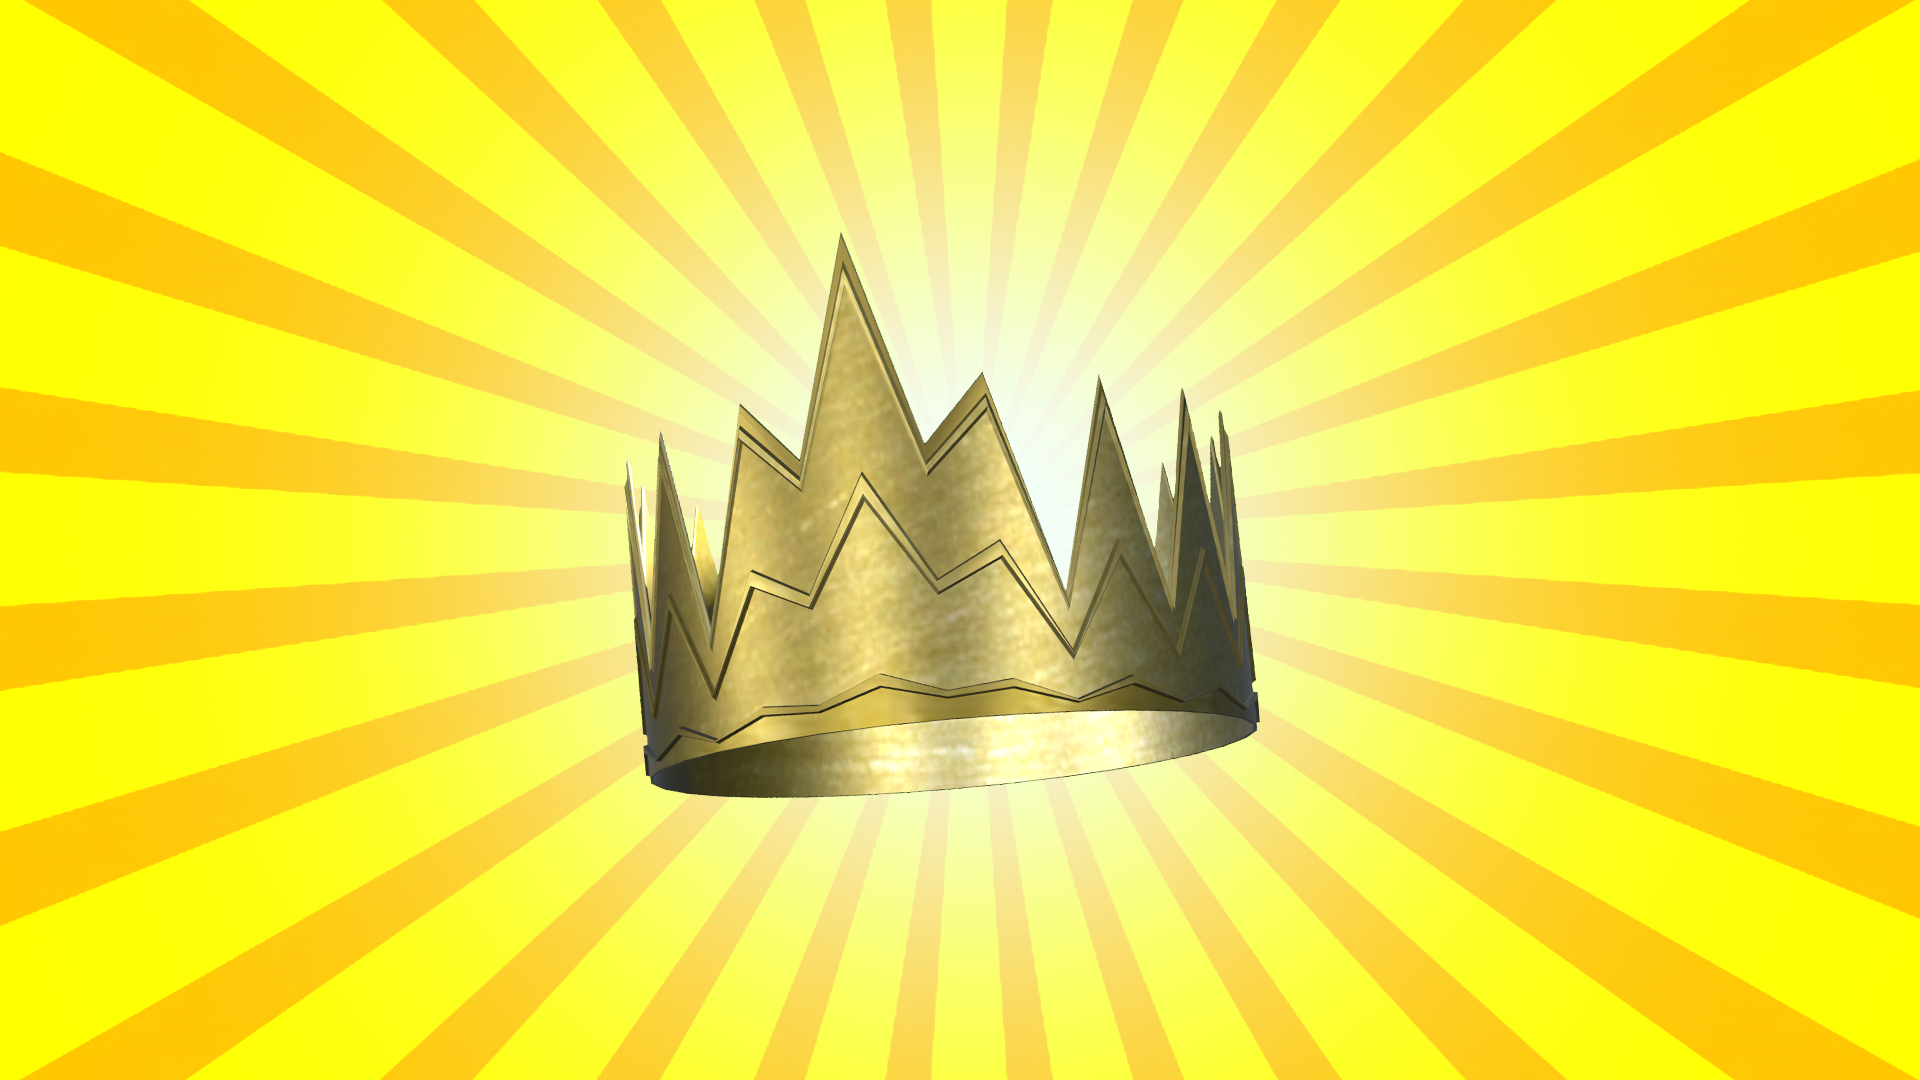 Crown of Glory